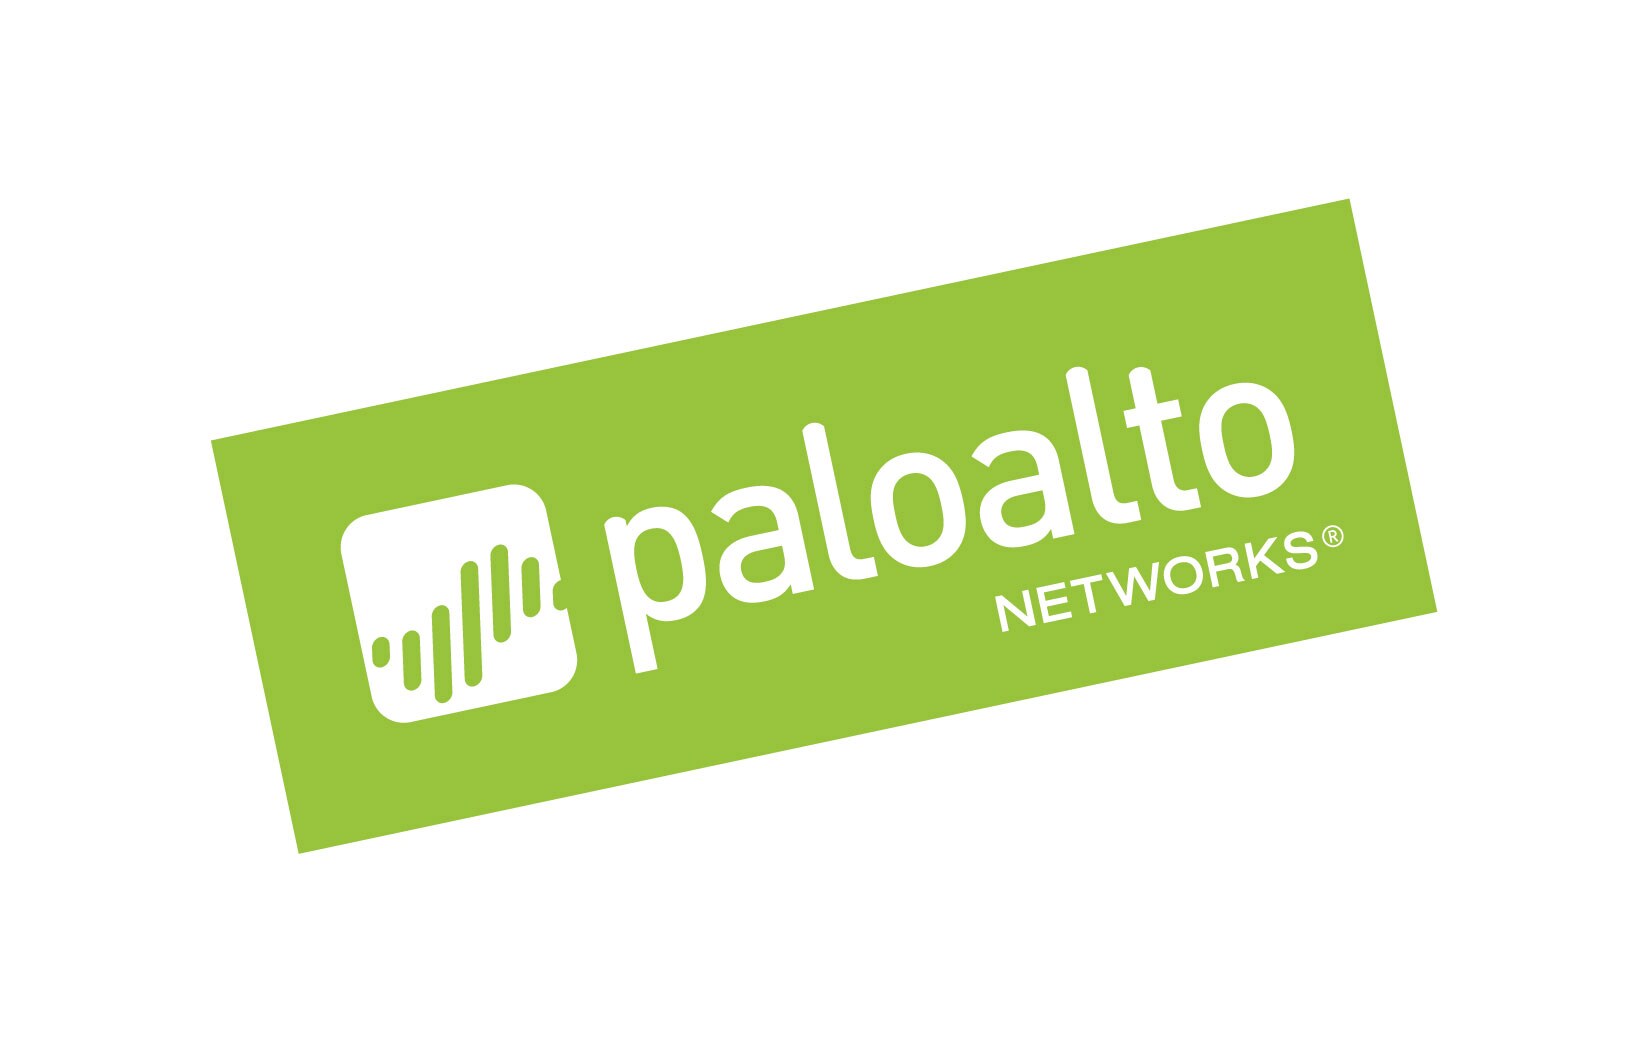 pan-logo-badge-green-dark-kick-up.jpg (1650×1050)